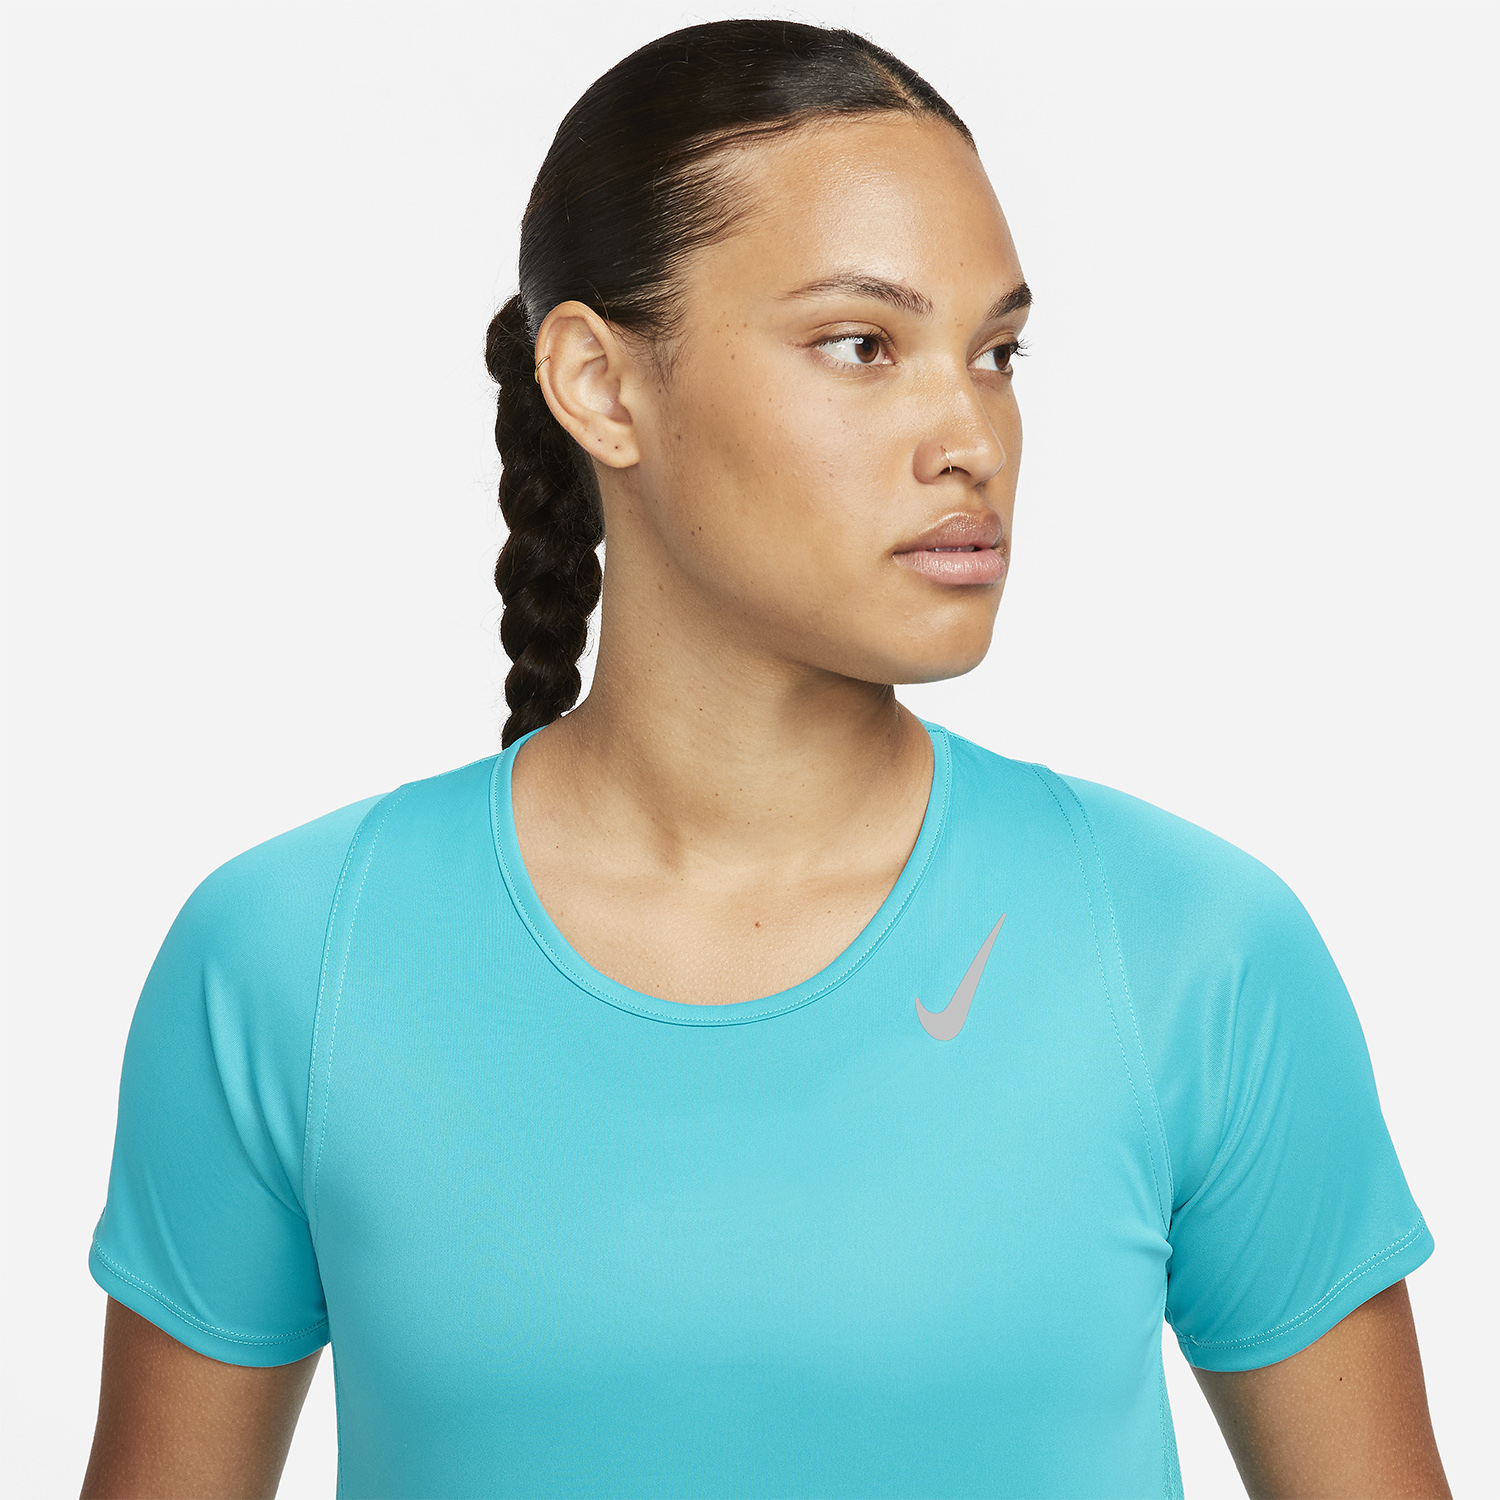 Nike Dri-FIT Race T-Shirt - Rapid Teal/Reflective Silver